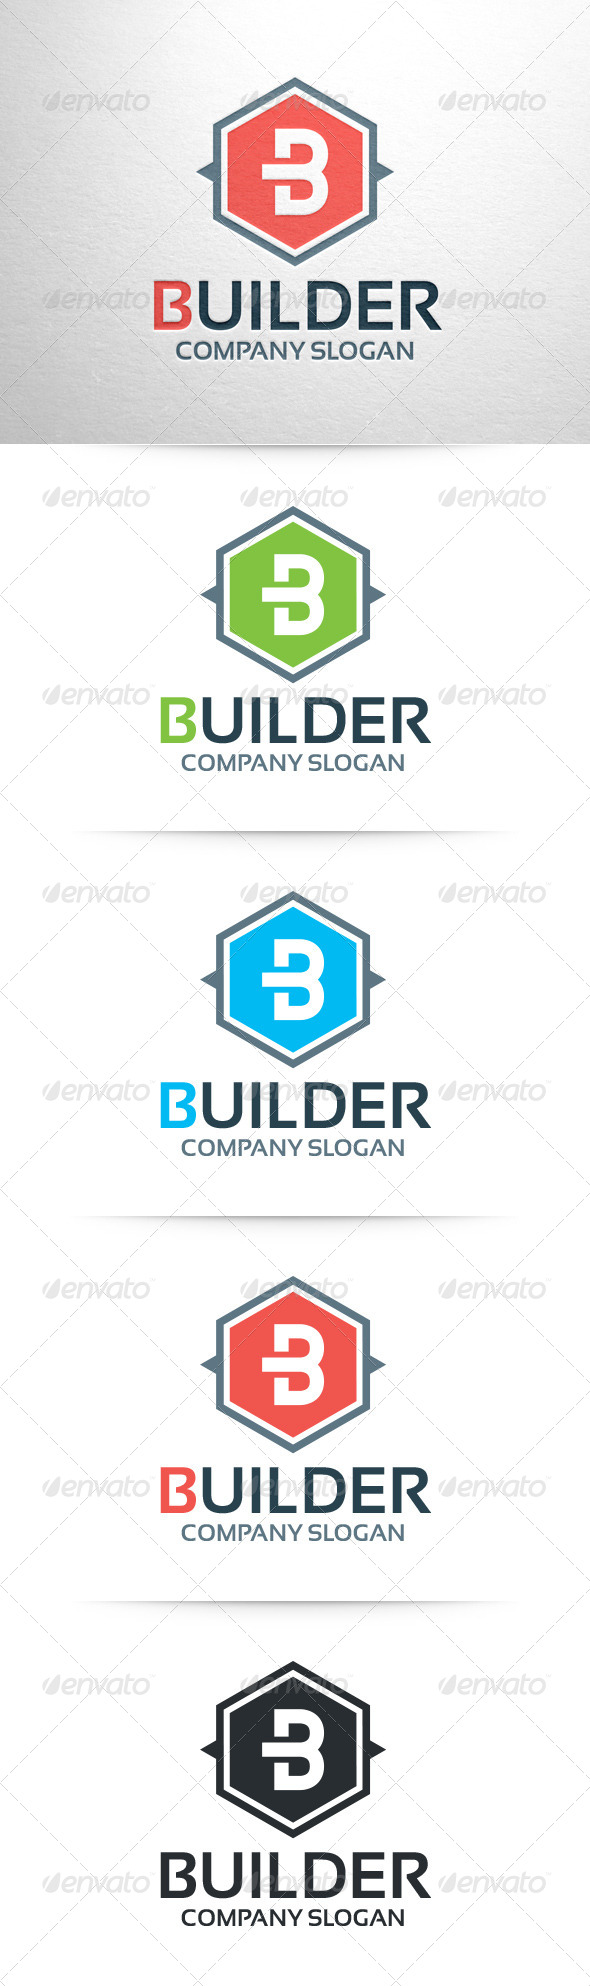 B S Letter Logo Template photo - 1